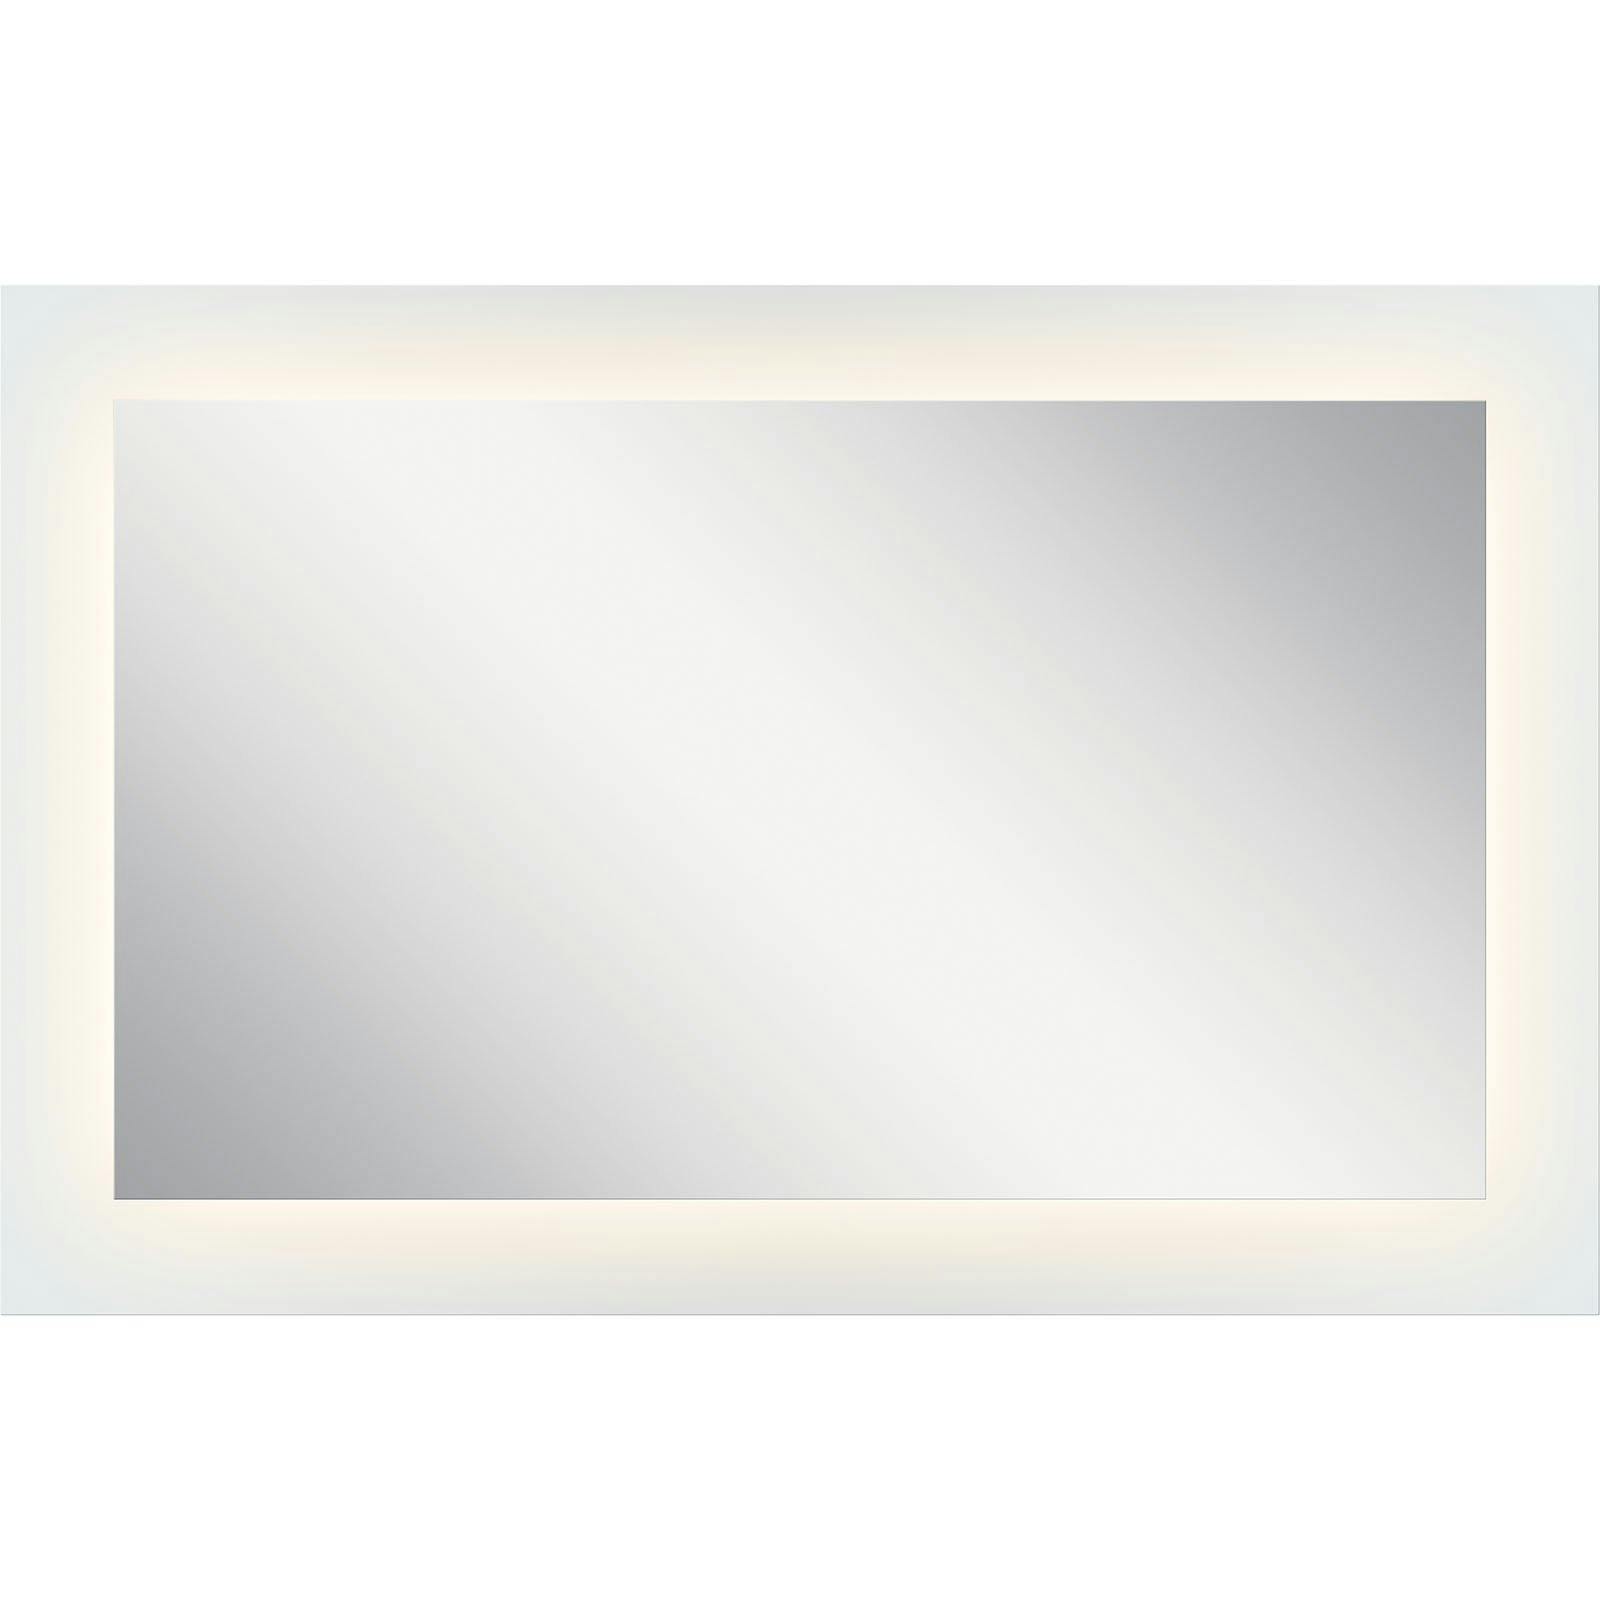 27" x 42" Rectangular LED Backlit Mirror on a white background